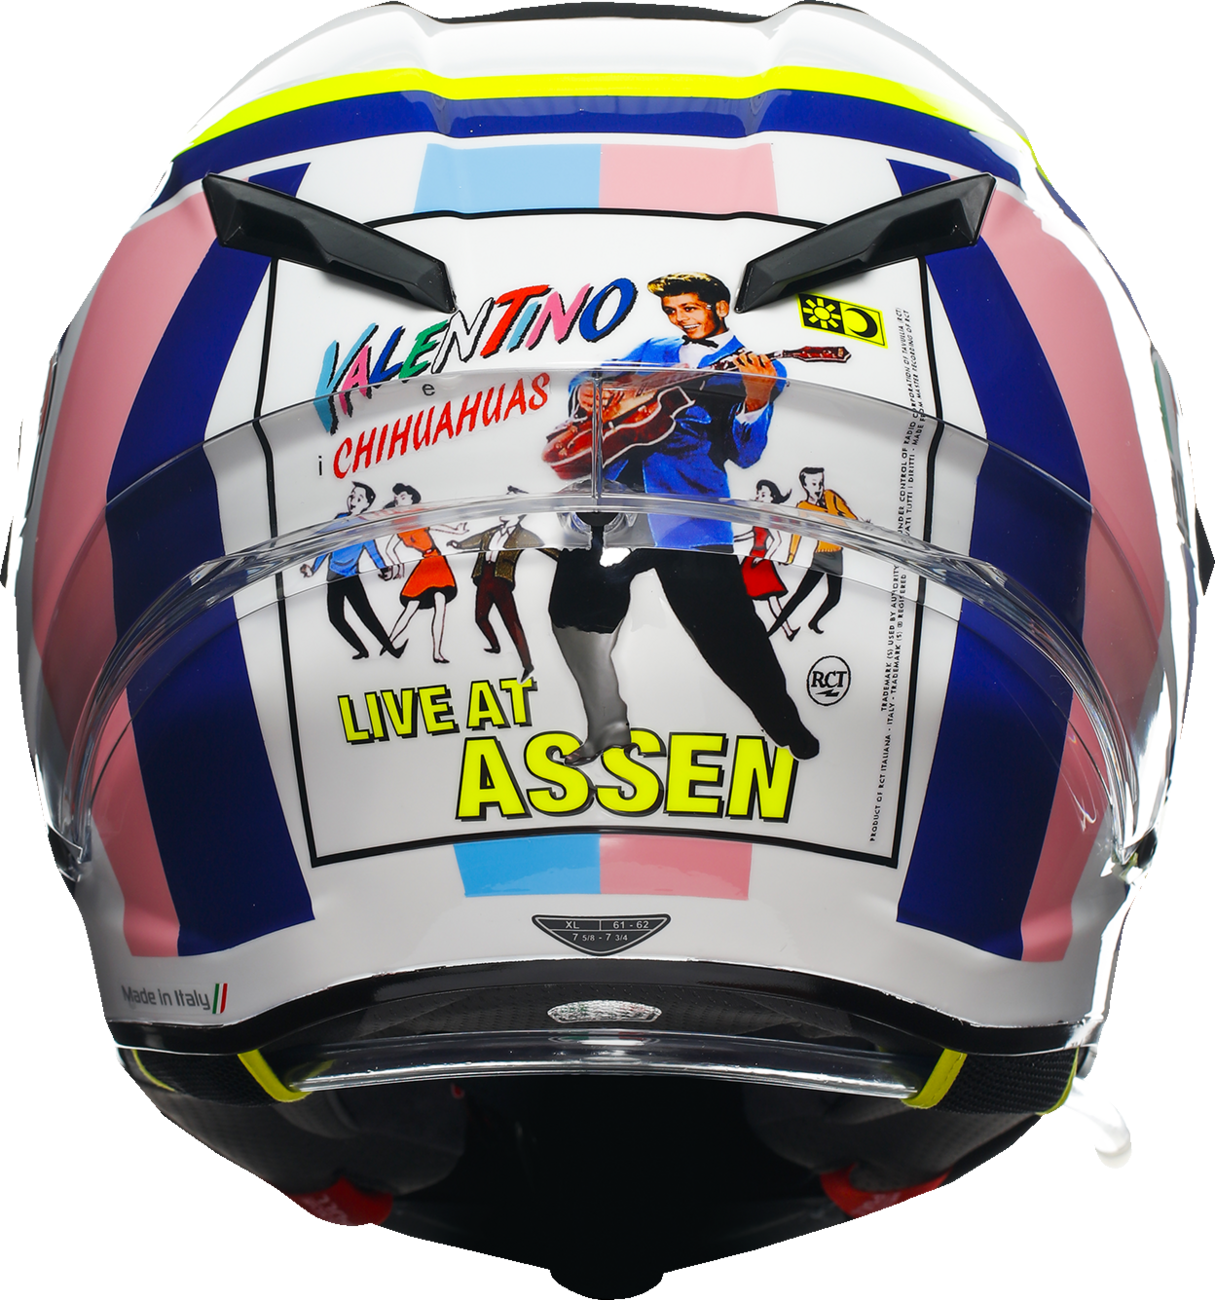 AGV Pista GP RR Helmet - Assen 2007 - Small 2118356002009S